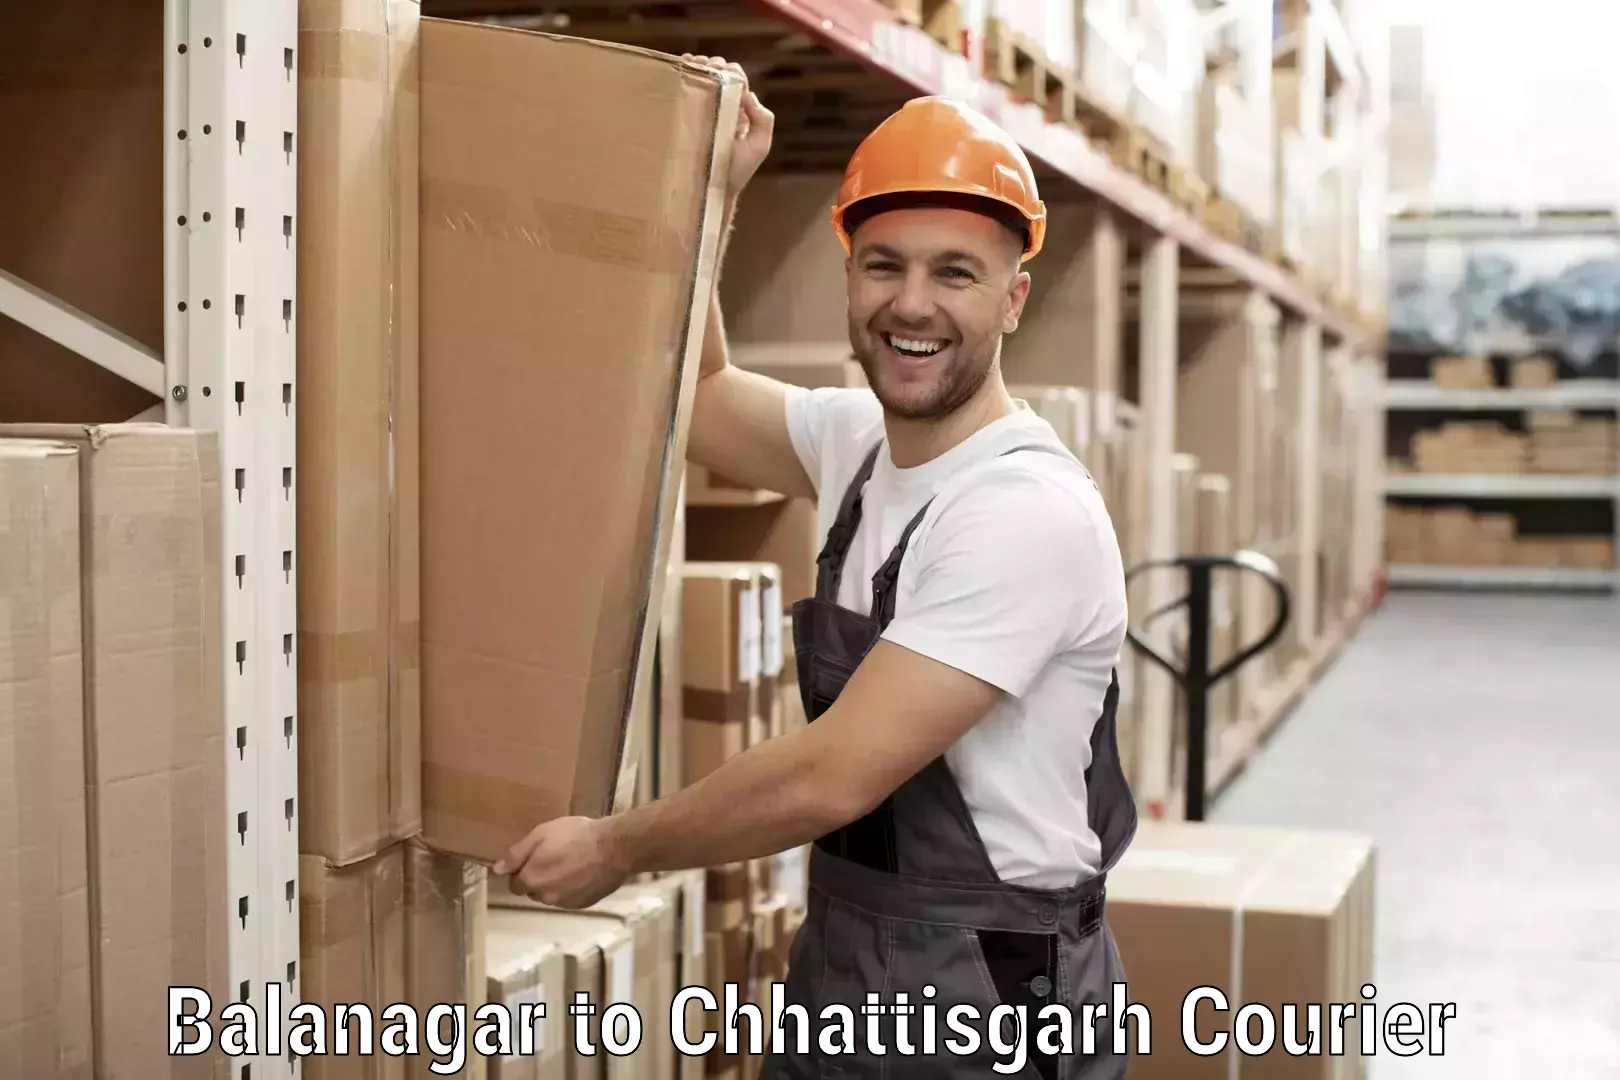 Specialized shipment handling Balanagar to Patna Chhattisgarh